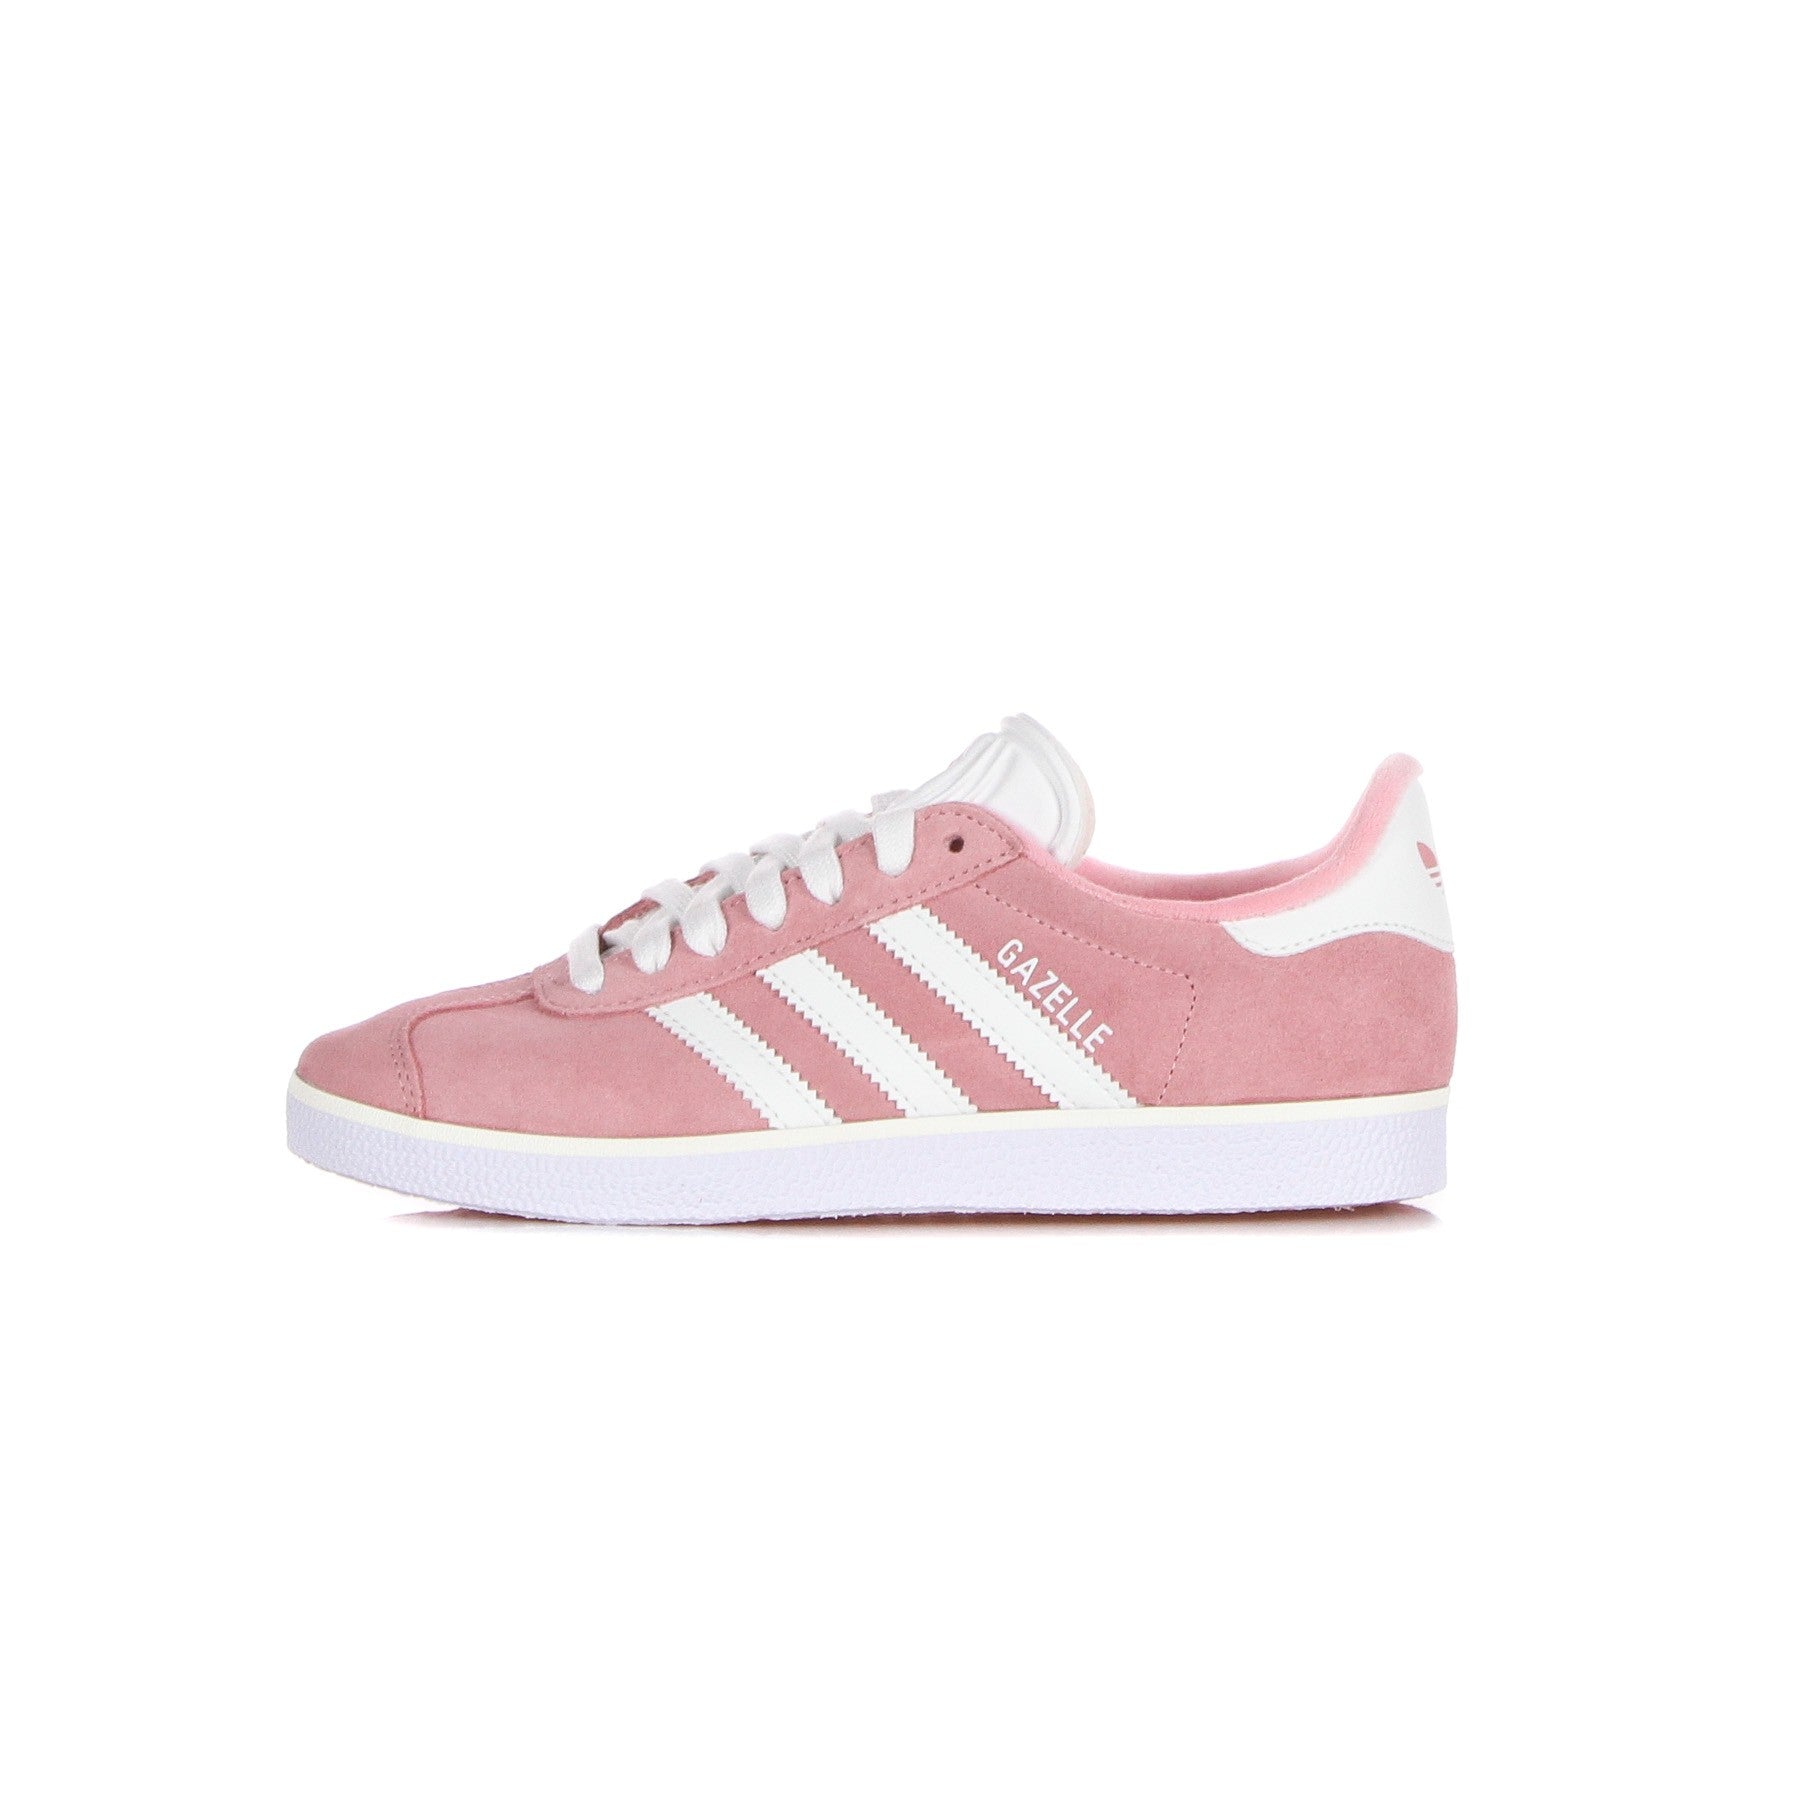 Gazelle W Women's Low Shoe Light Pink/core White/silver Metallic